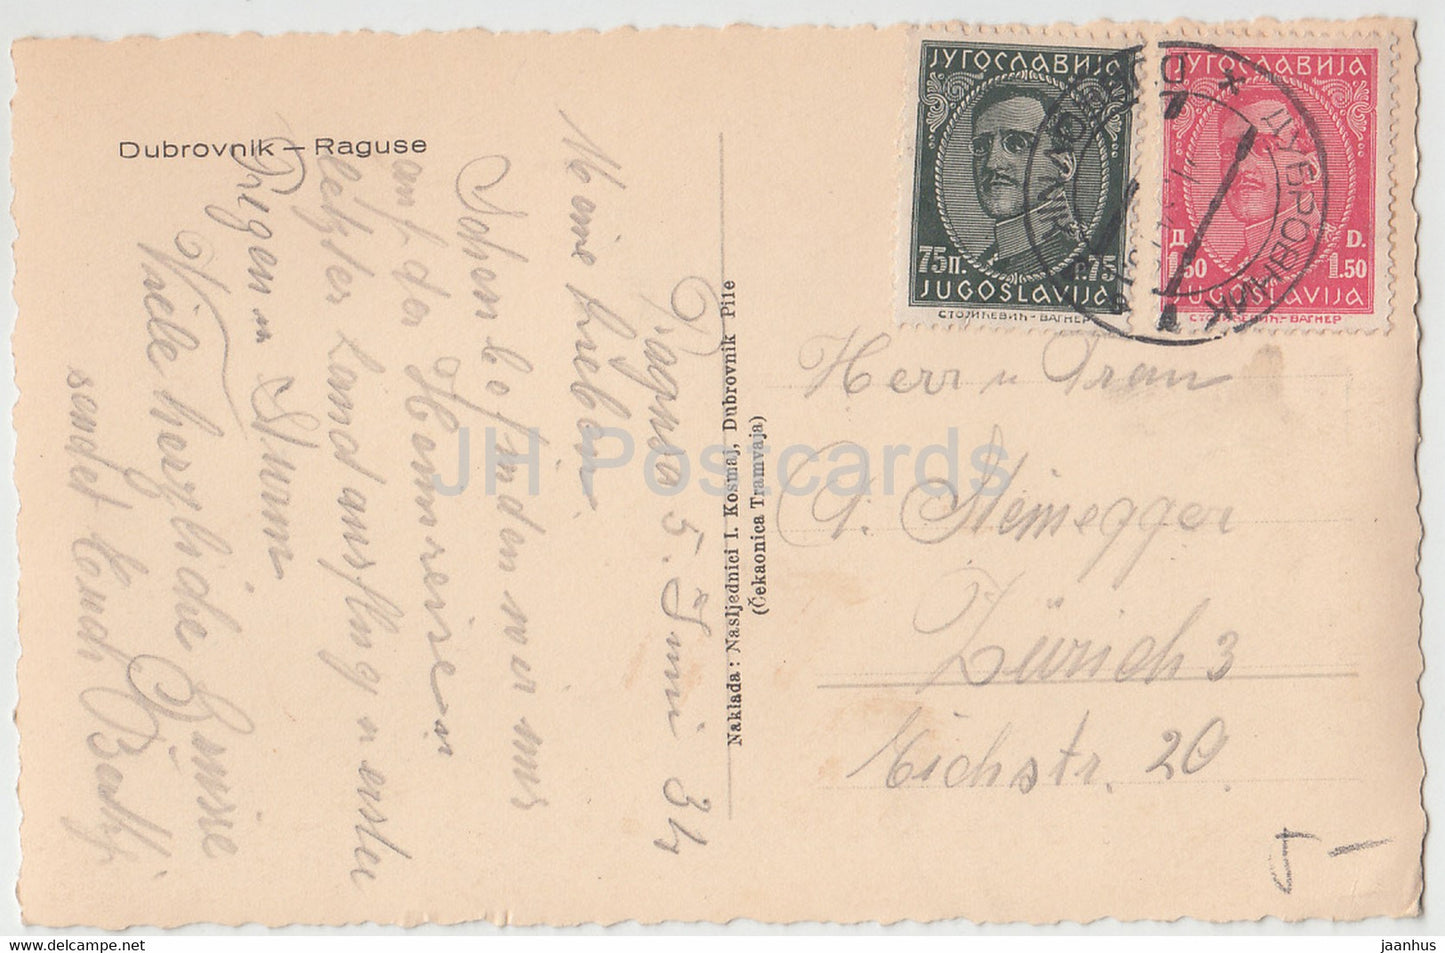 Dubrovnik - Raguse - carte postale ancienne - 1934 - Croatie - Yougoslavie - occasion